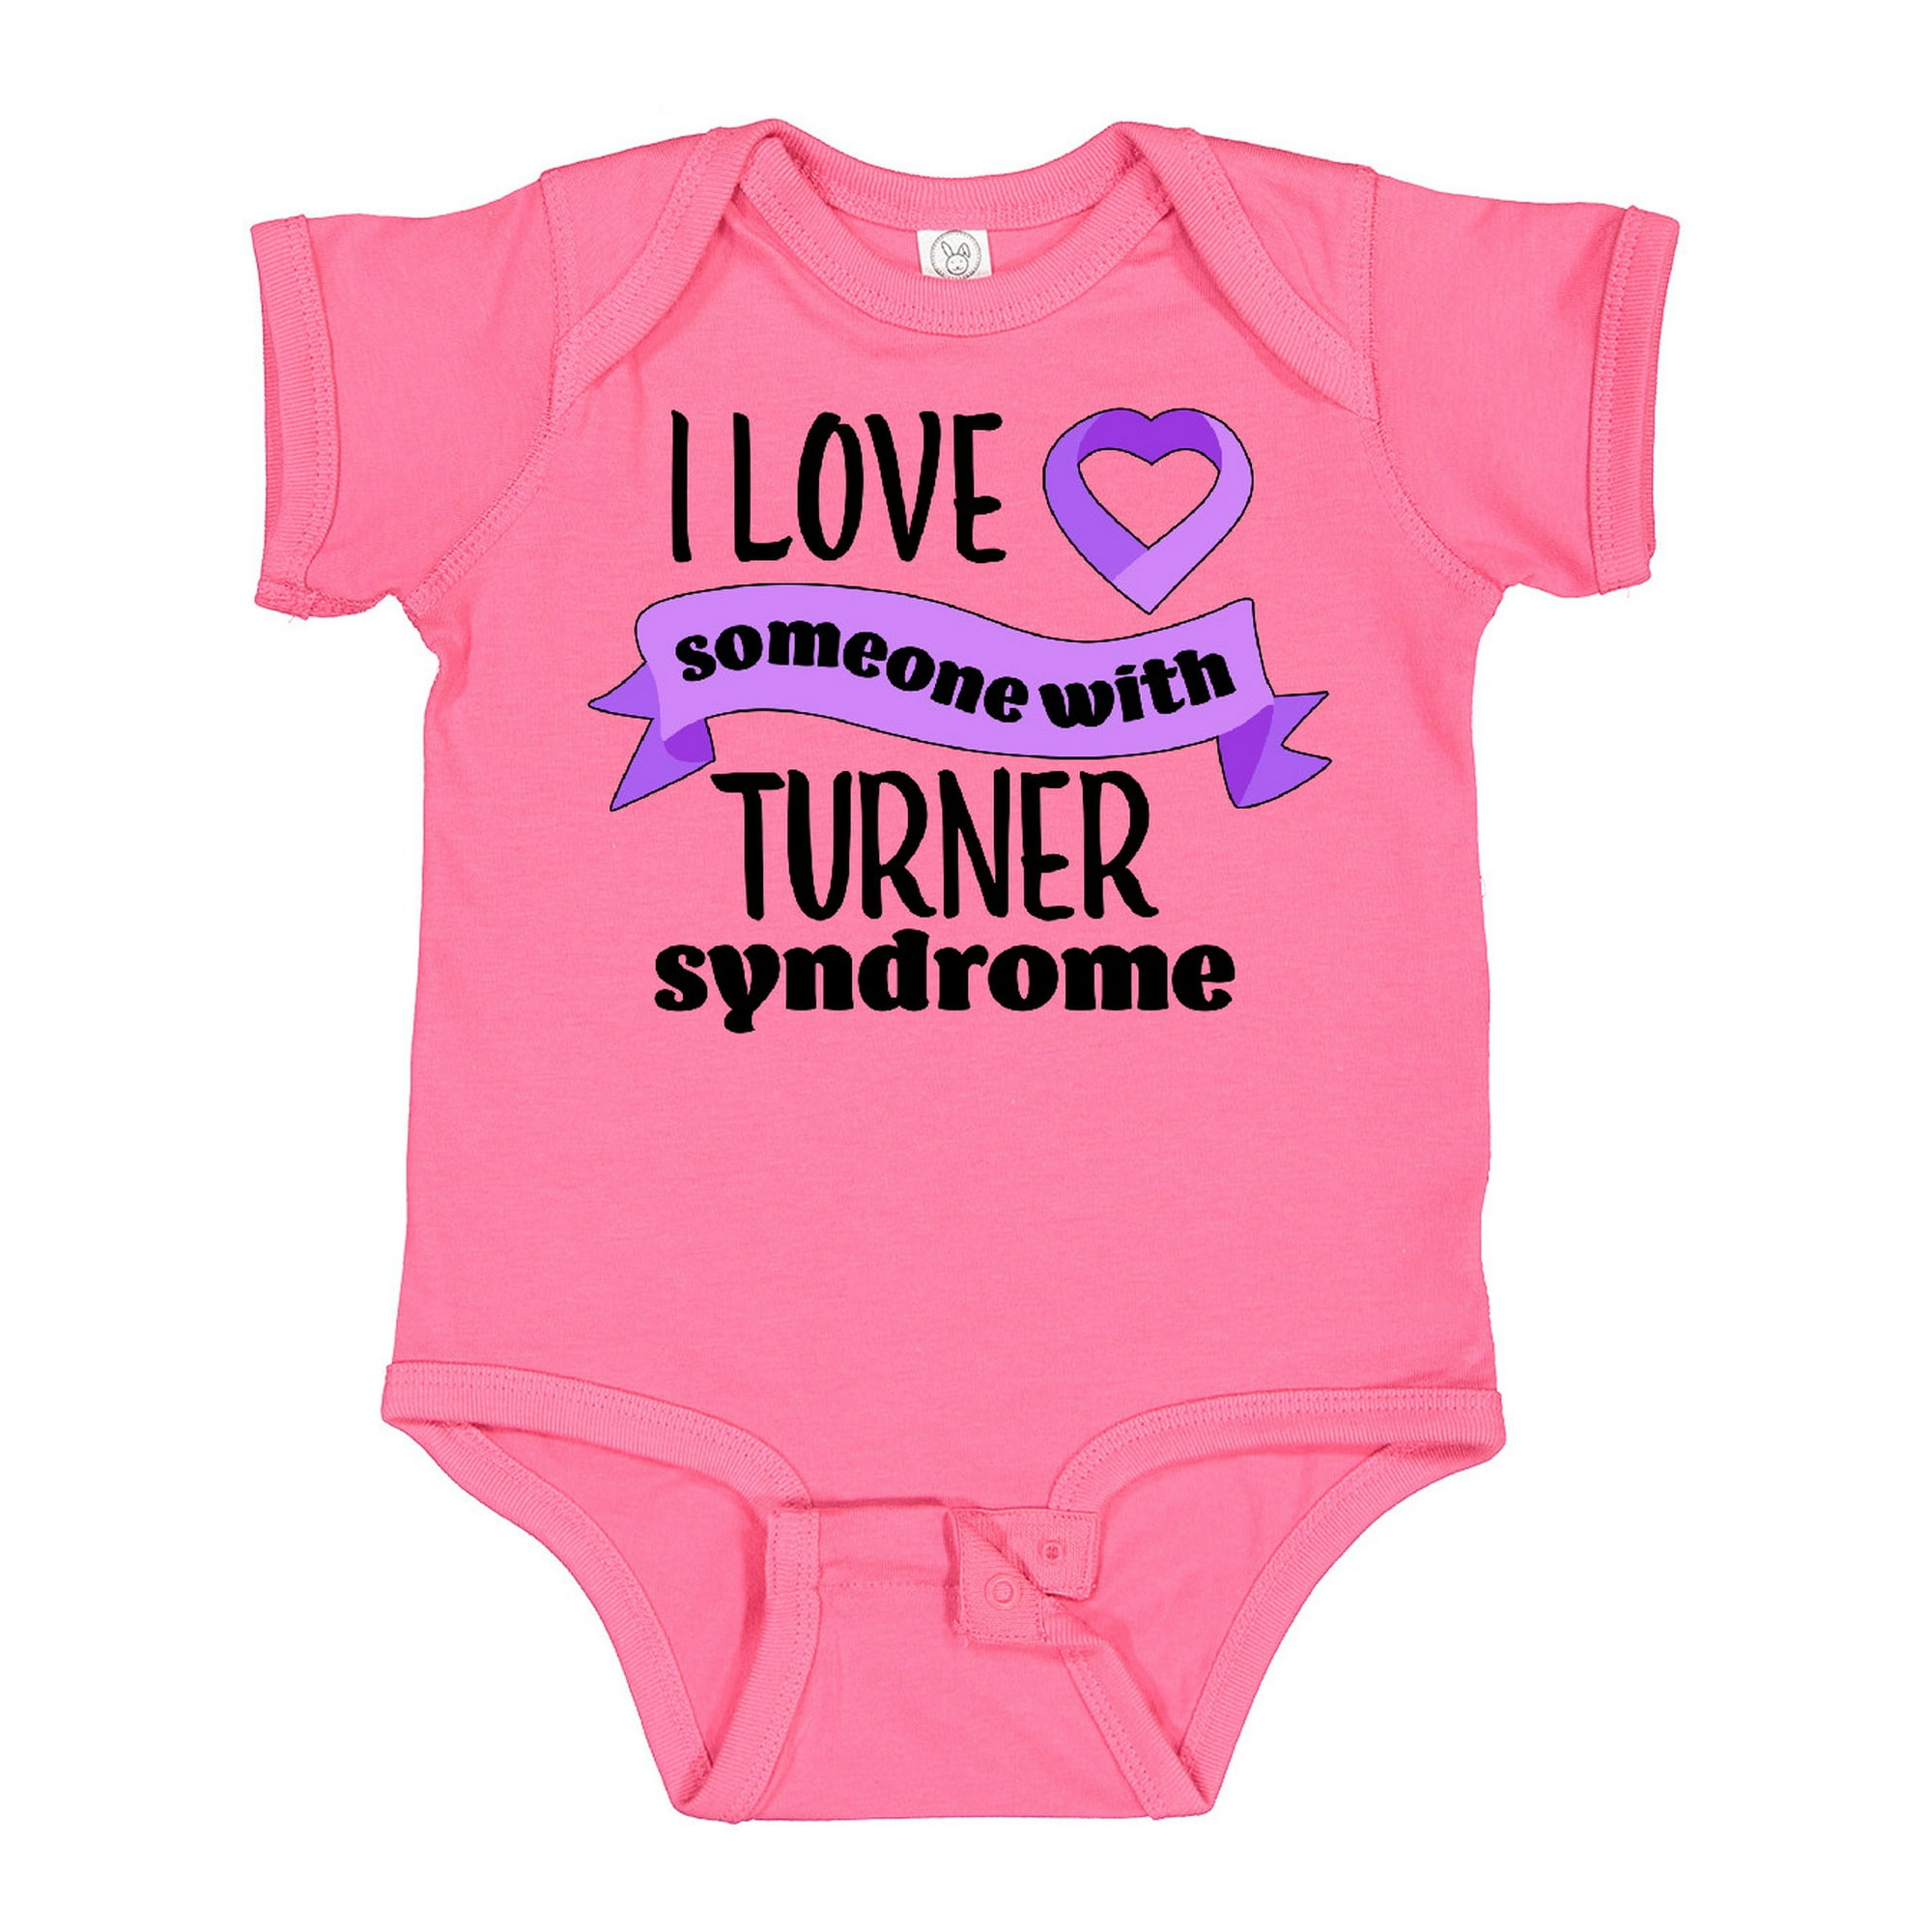 turner syndrome baby girl